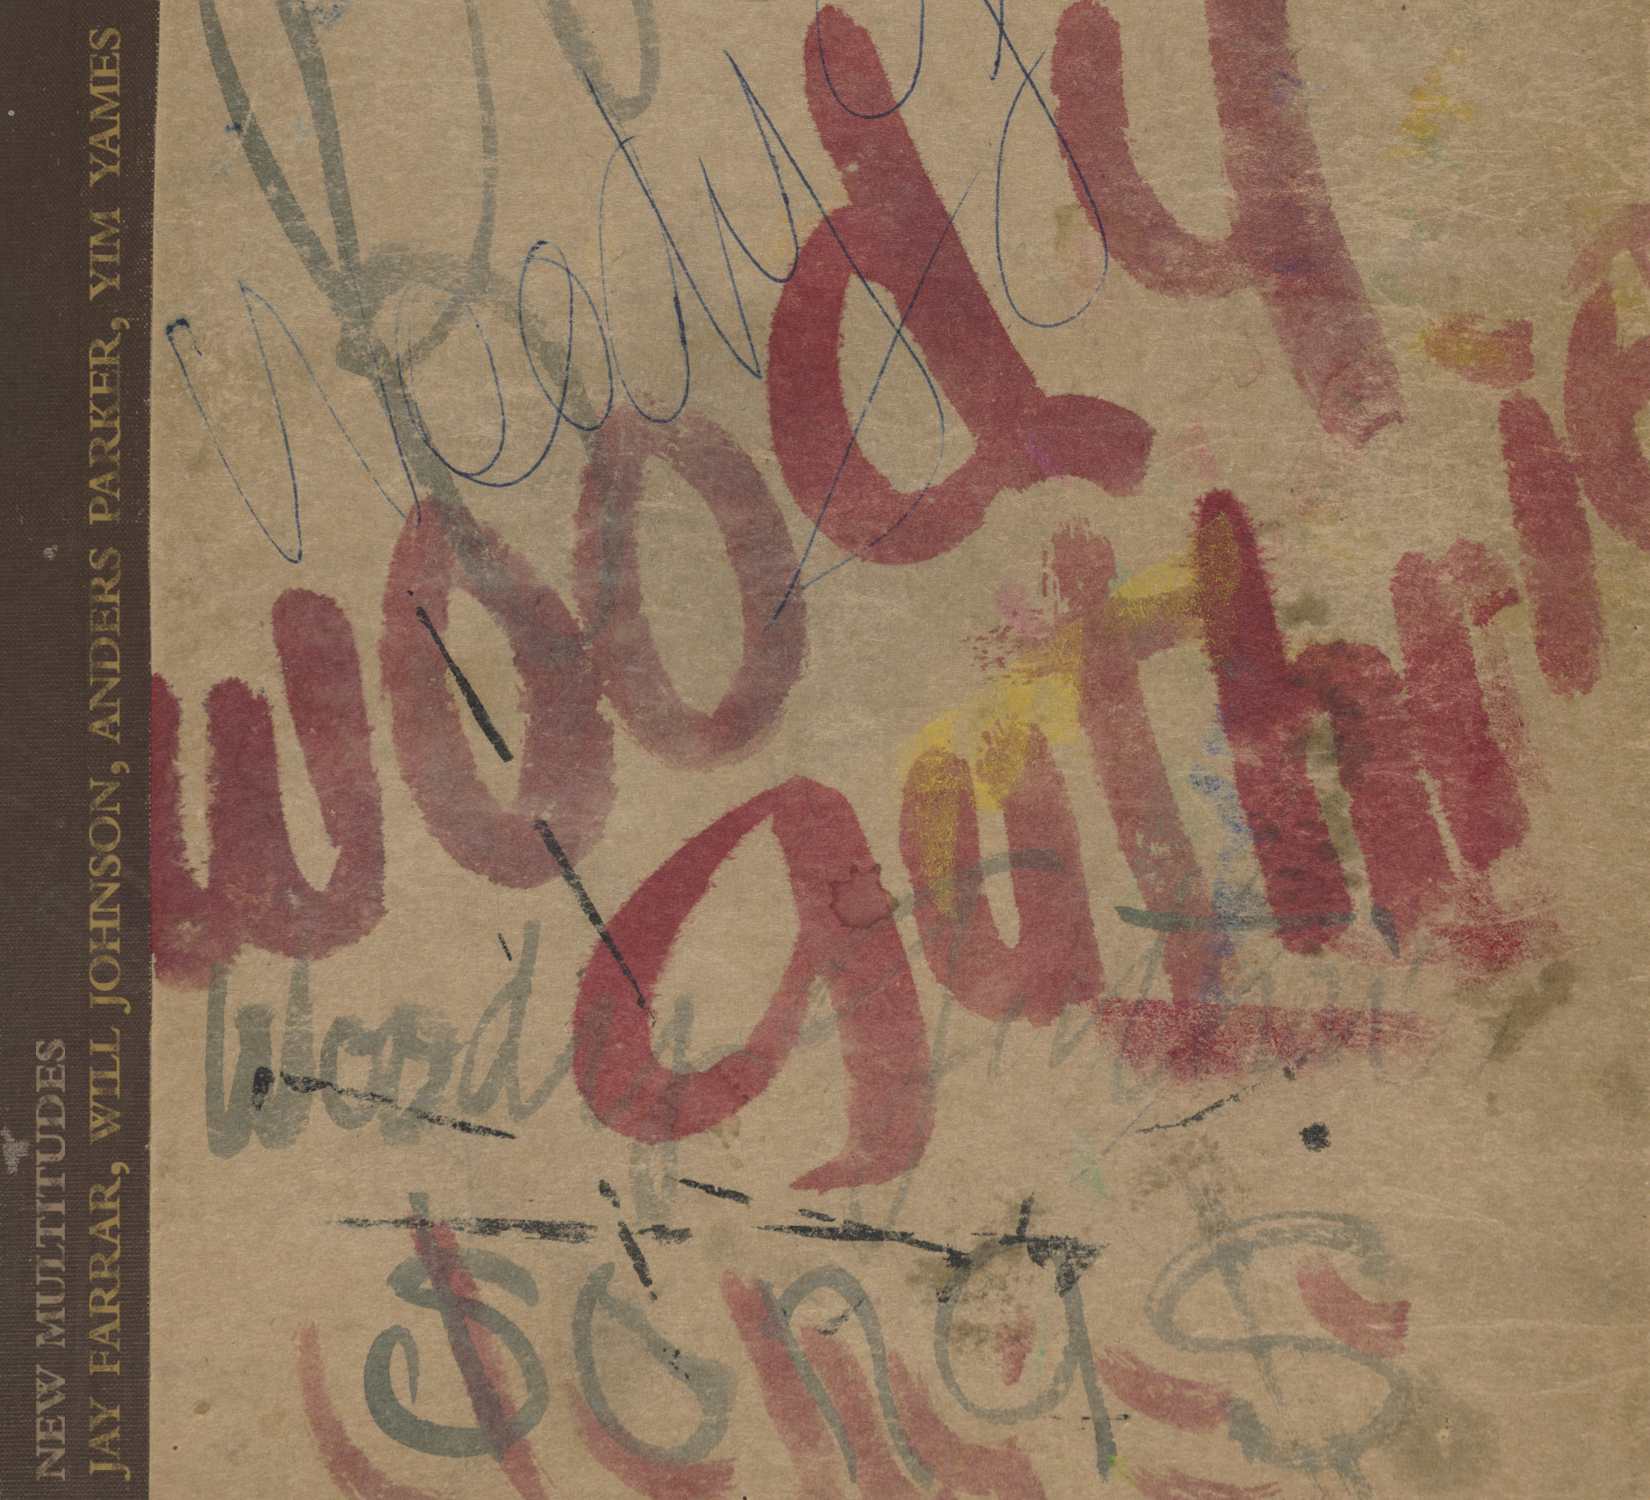 Jay Farrar, Yim Yames’ Woody Guthrie Album New Multitudes Due In February